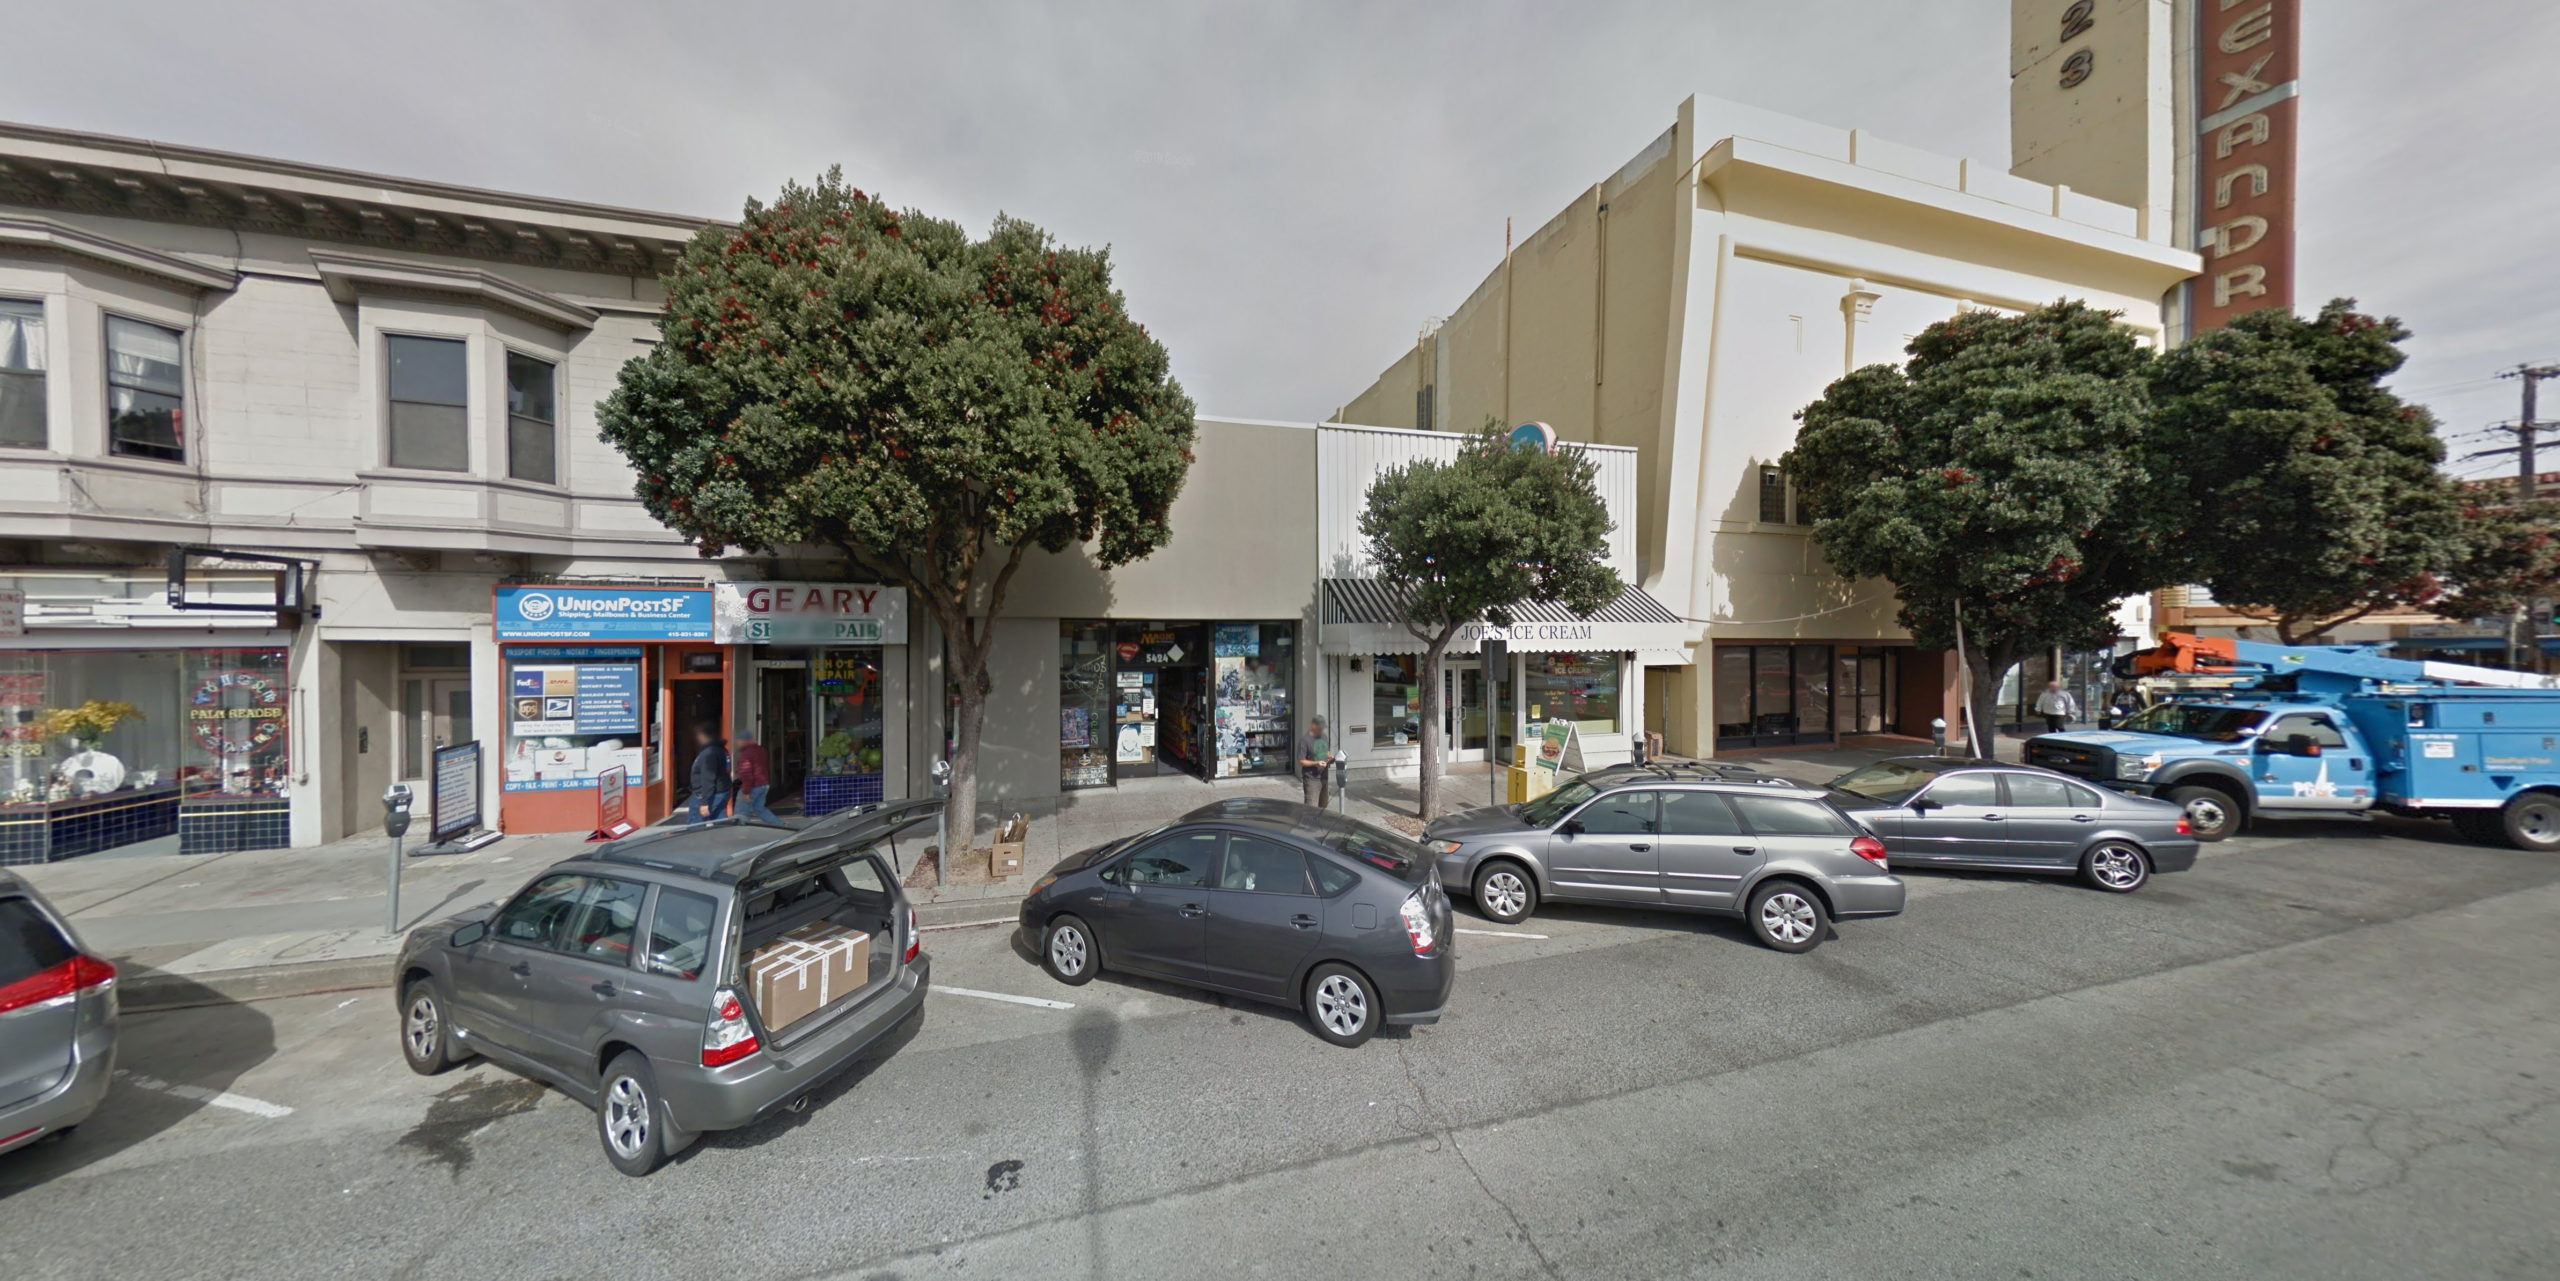 5420 Geary Boulevard, image via Google Street View